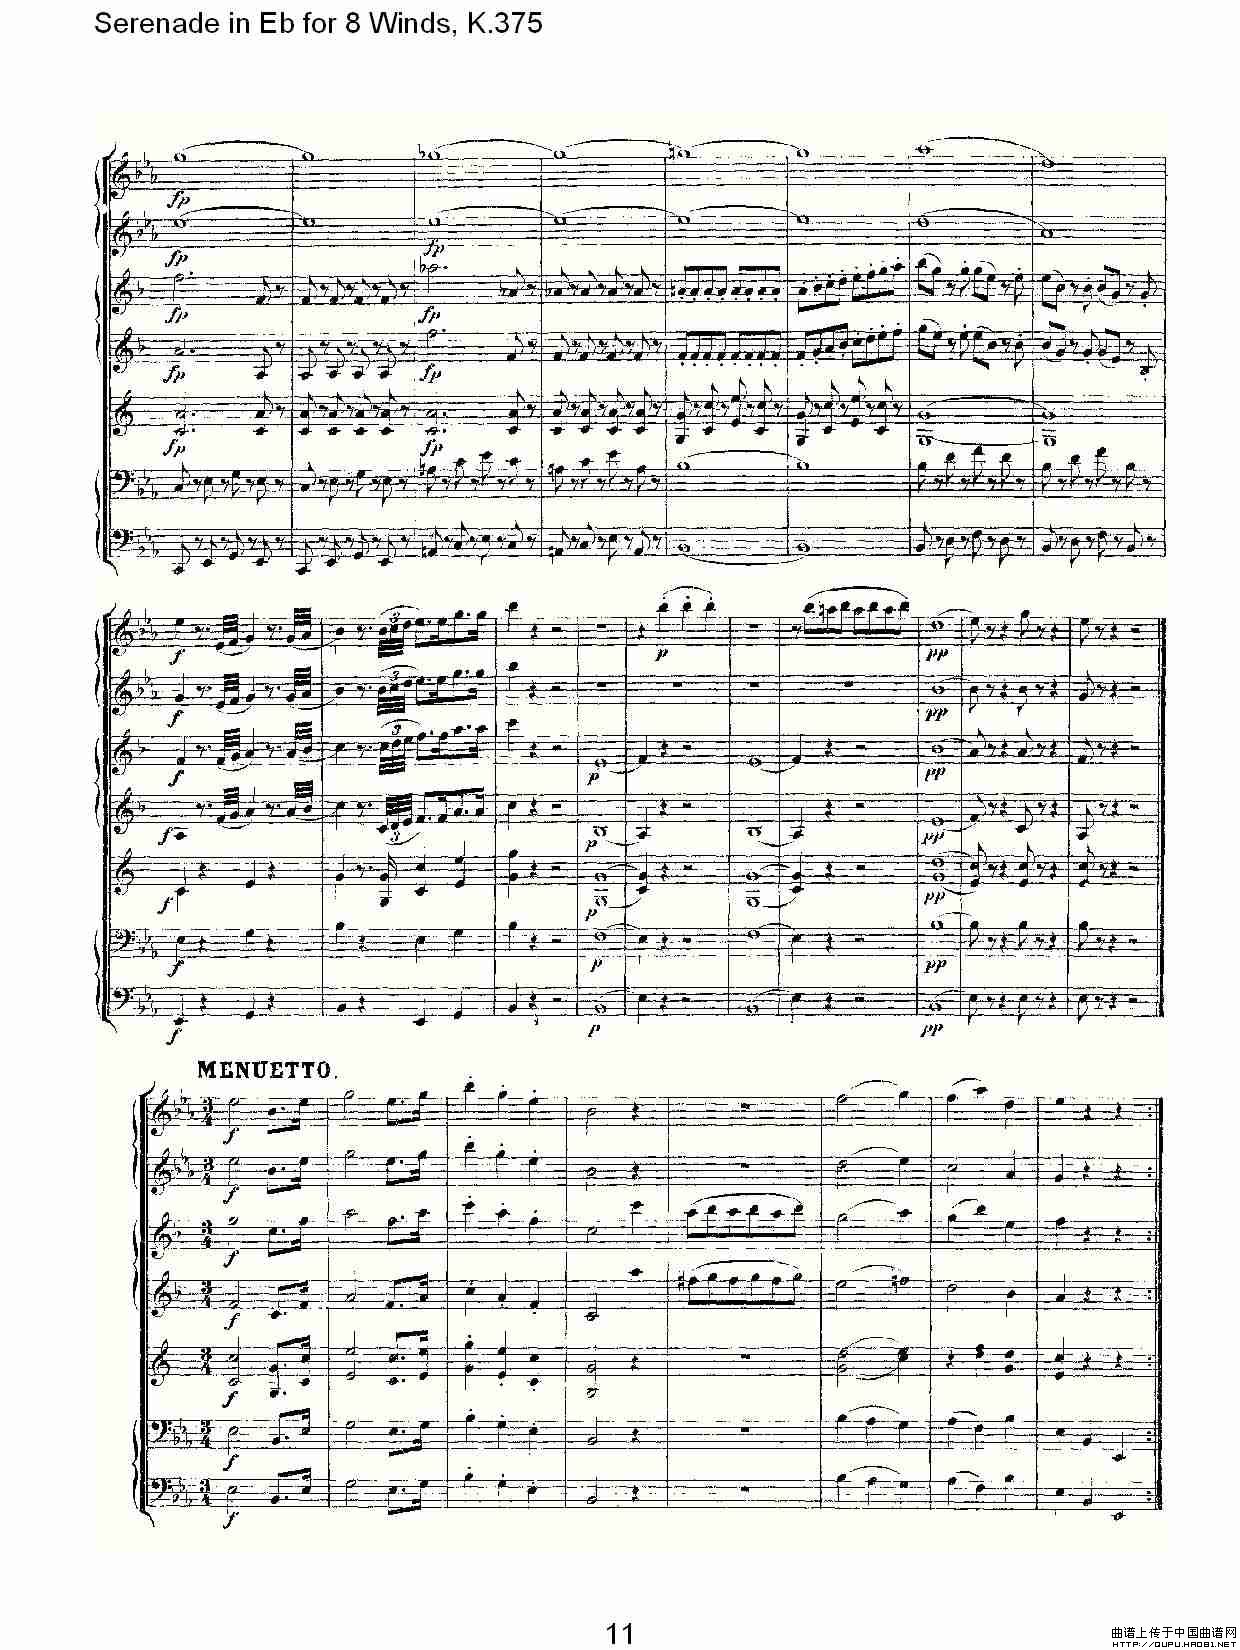 Serenade in Eb for 8 Winds, K.375（Eb调8管乐小夜曲, K.